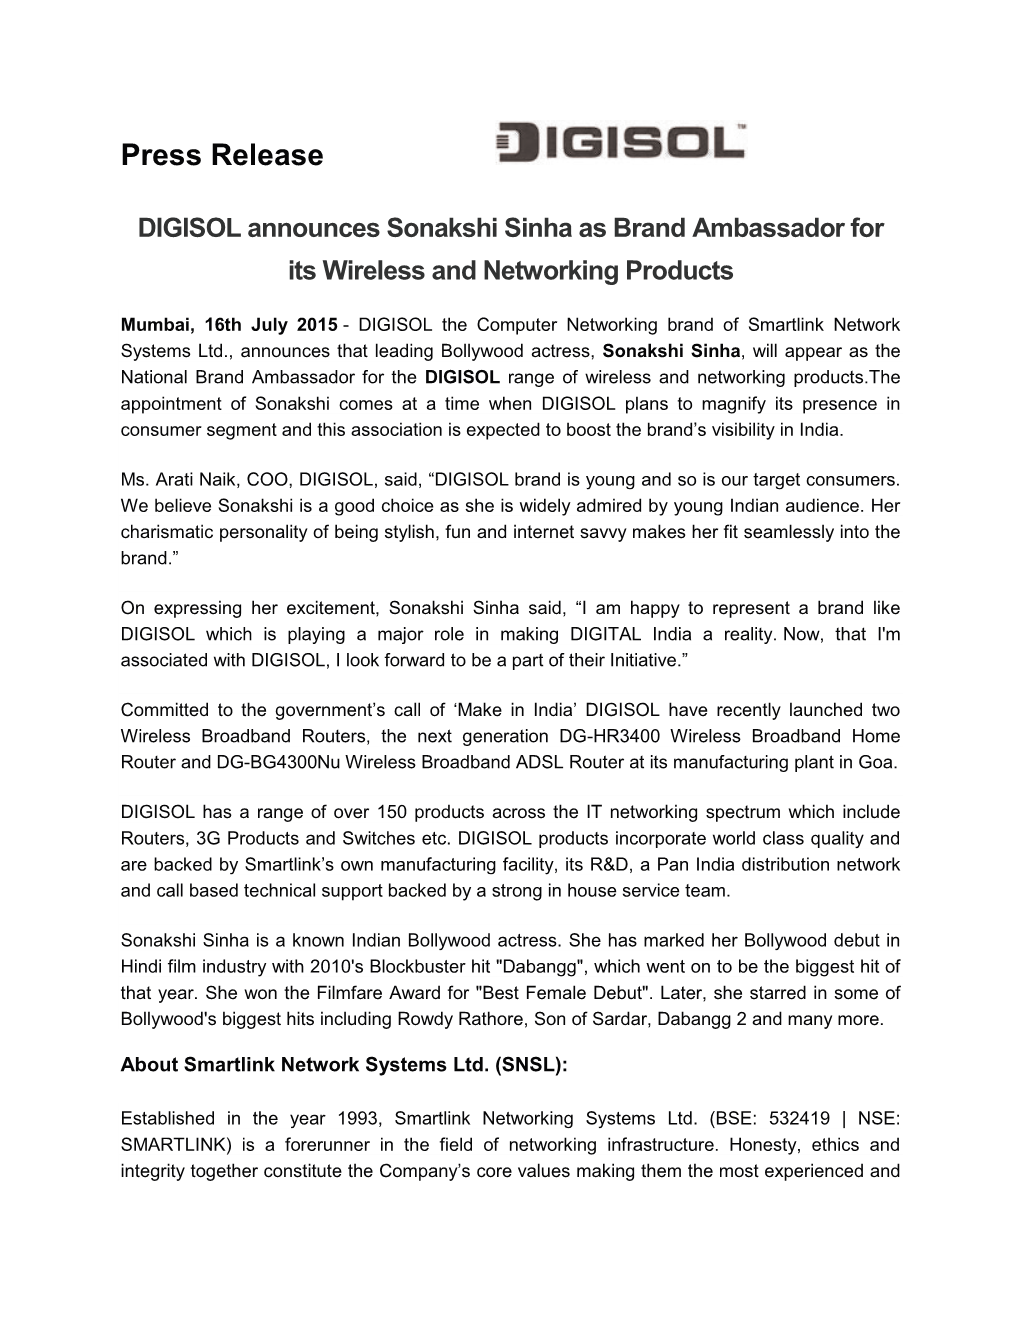 Press Release DIGISOL Announces Sonakshi Sinha As Brand